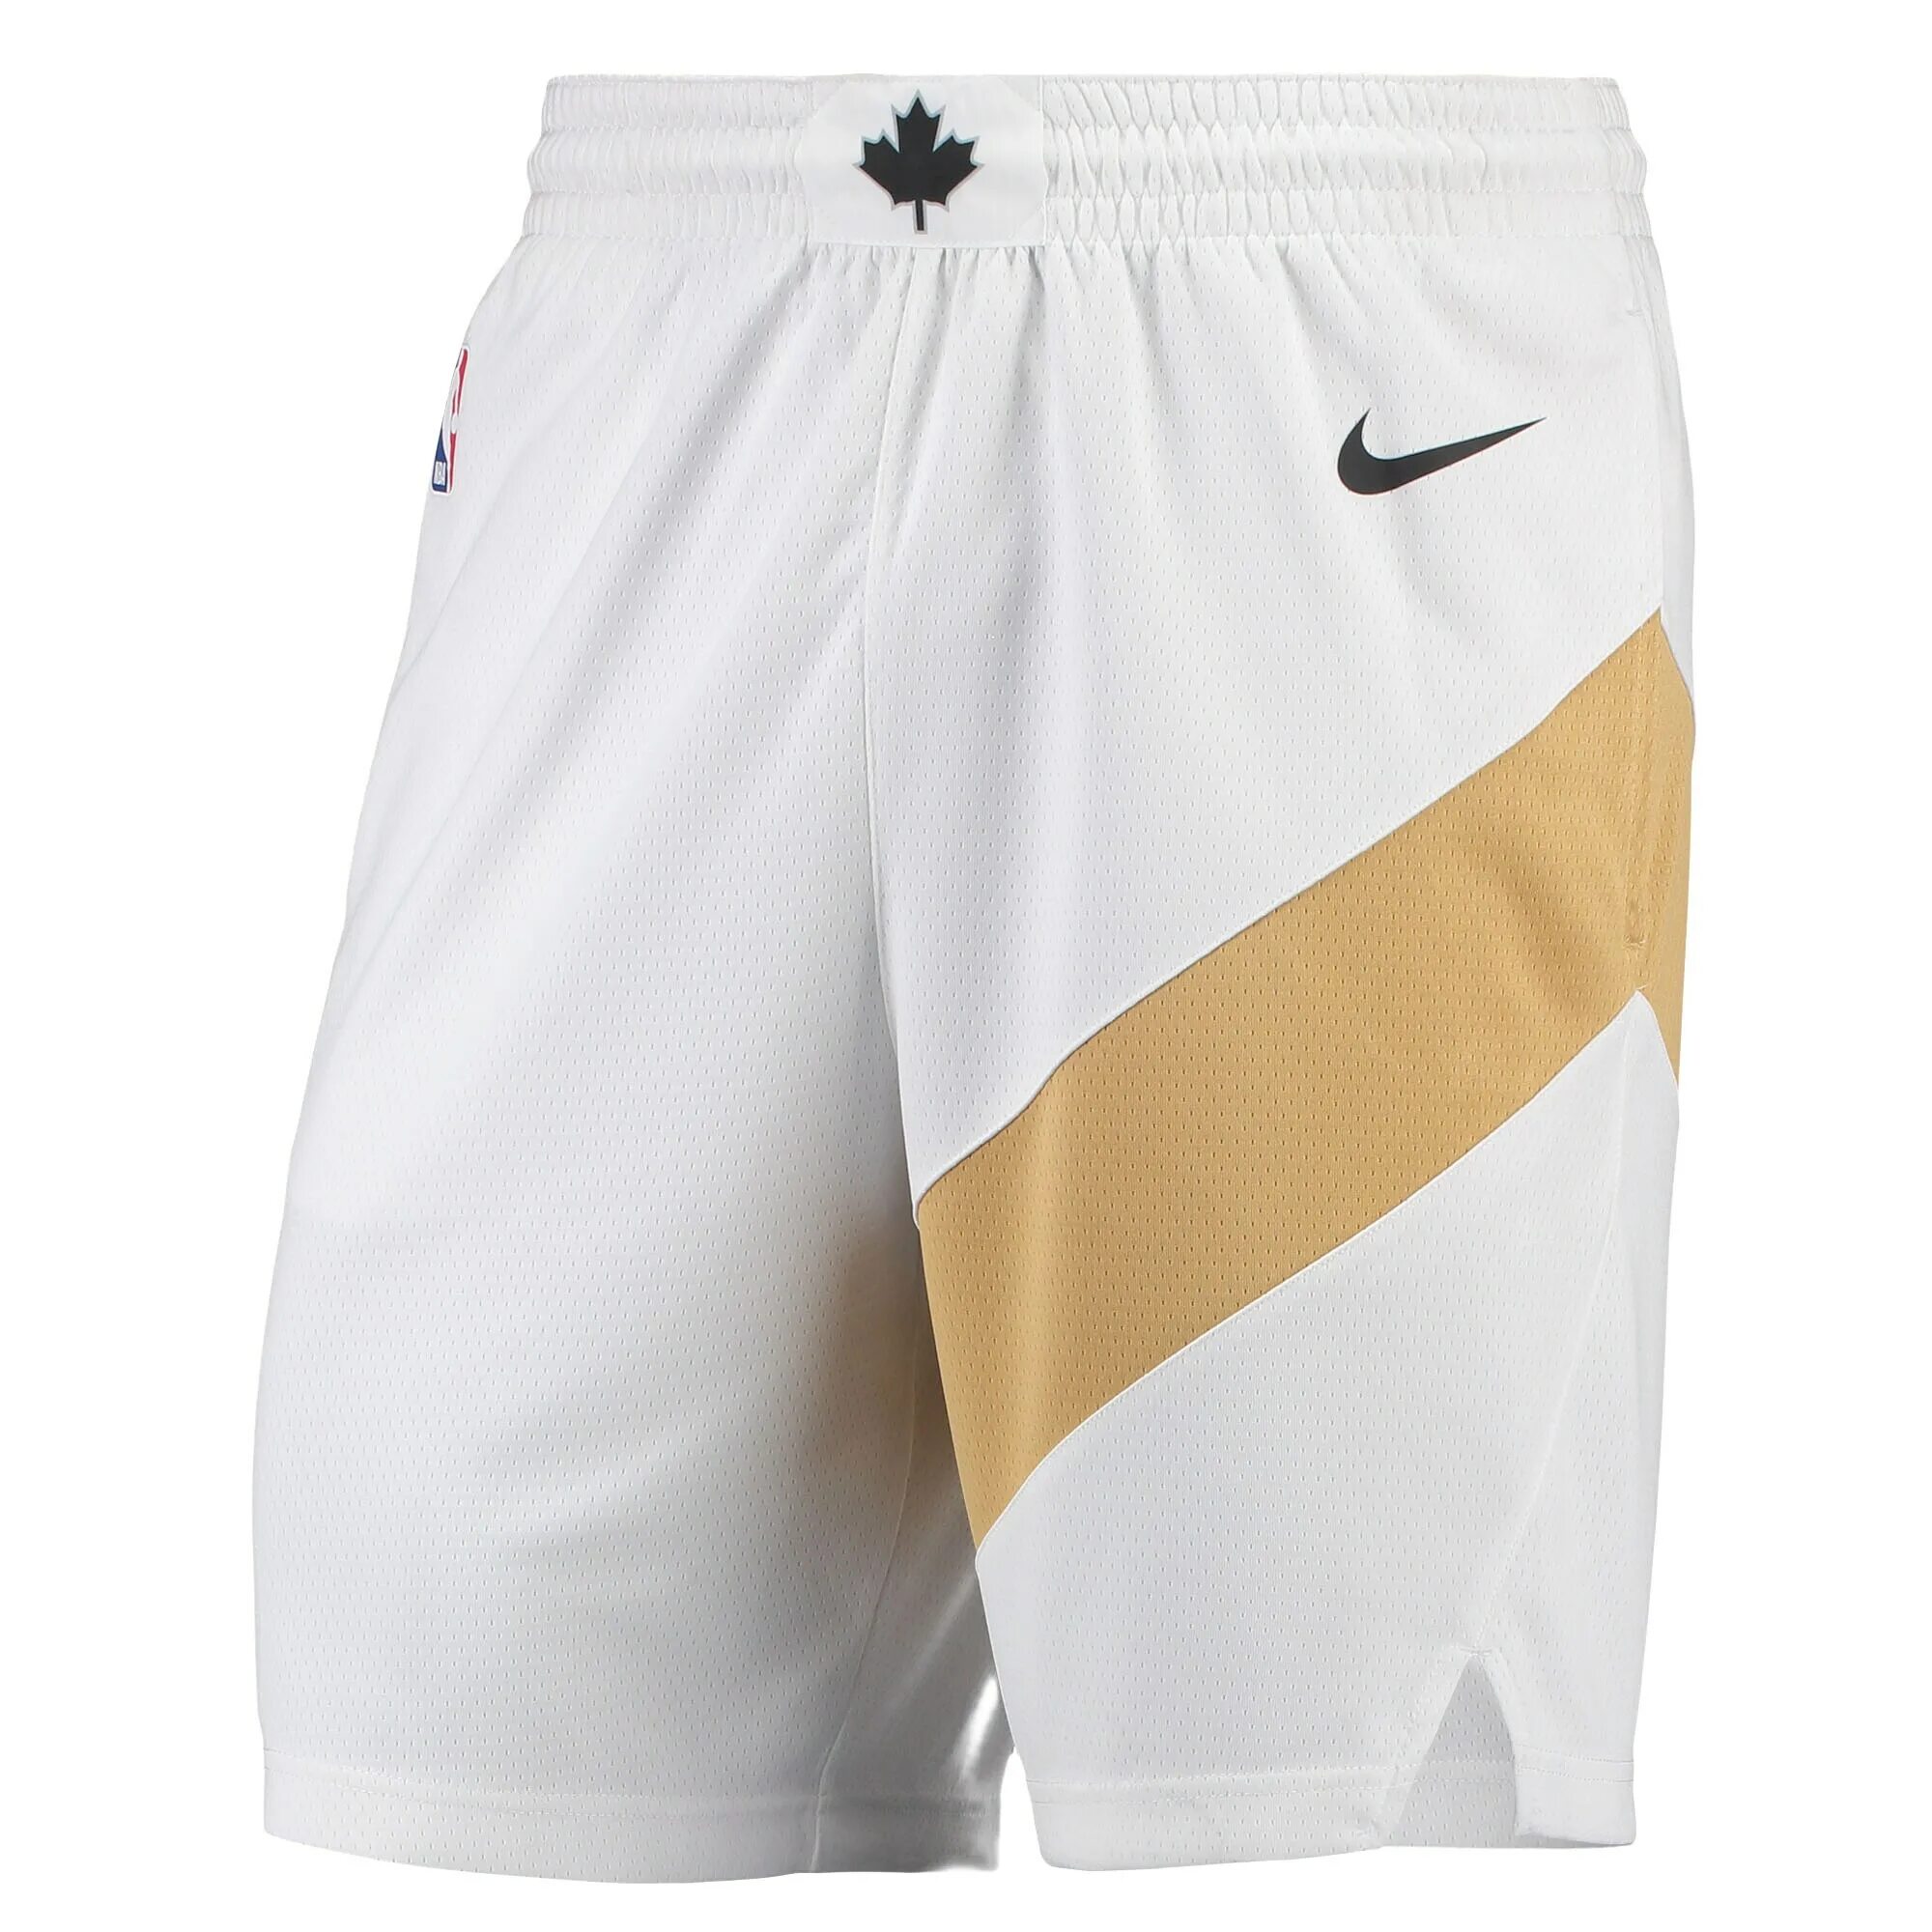 Шорты Toronto Raptors. Nike Dri Fit Basketball shorts 3.0. Шорты Toronto 21. Шорты Торонто Рэпторс.